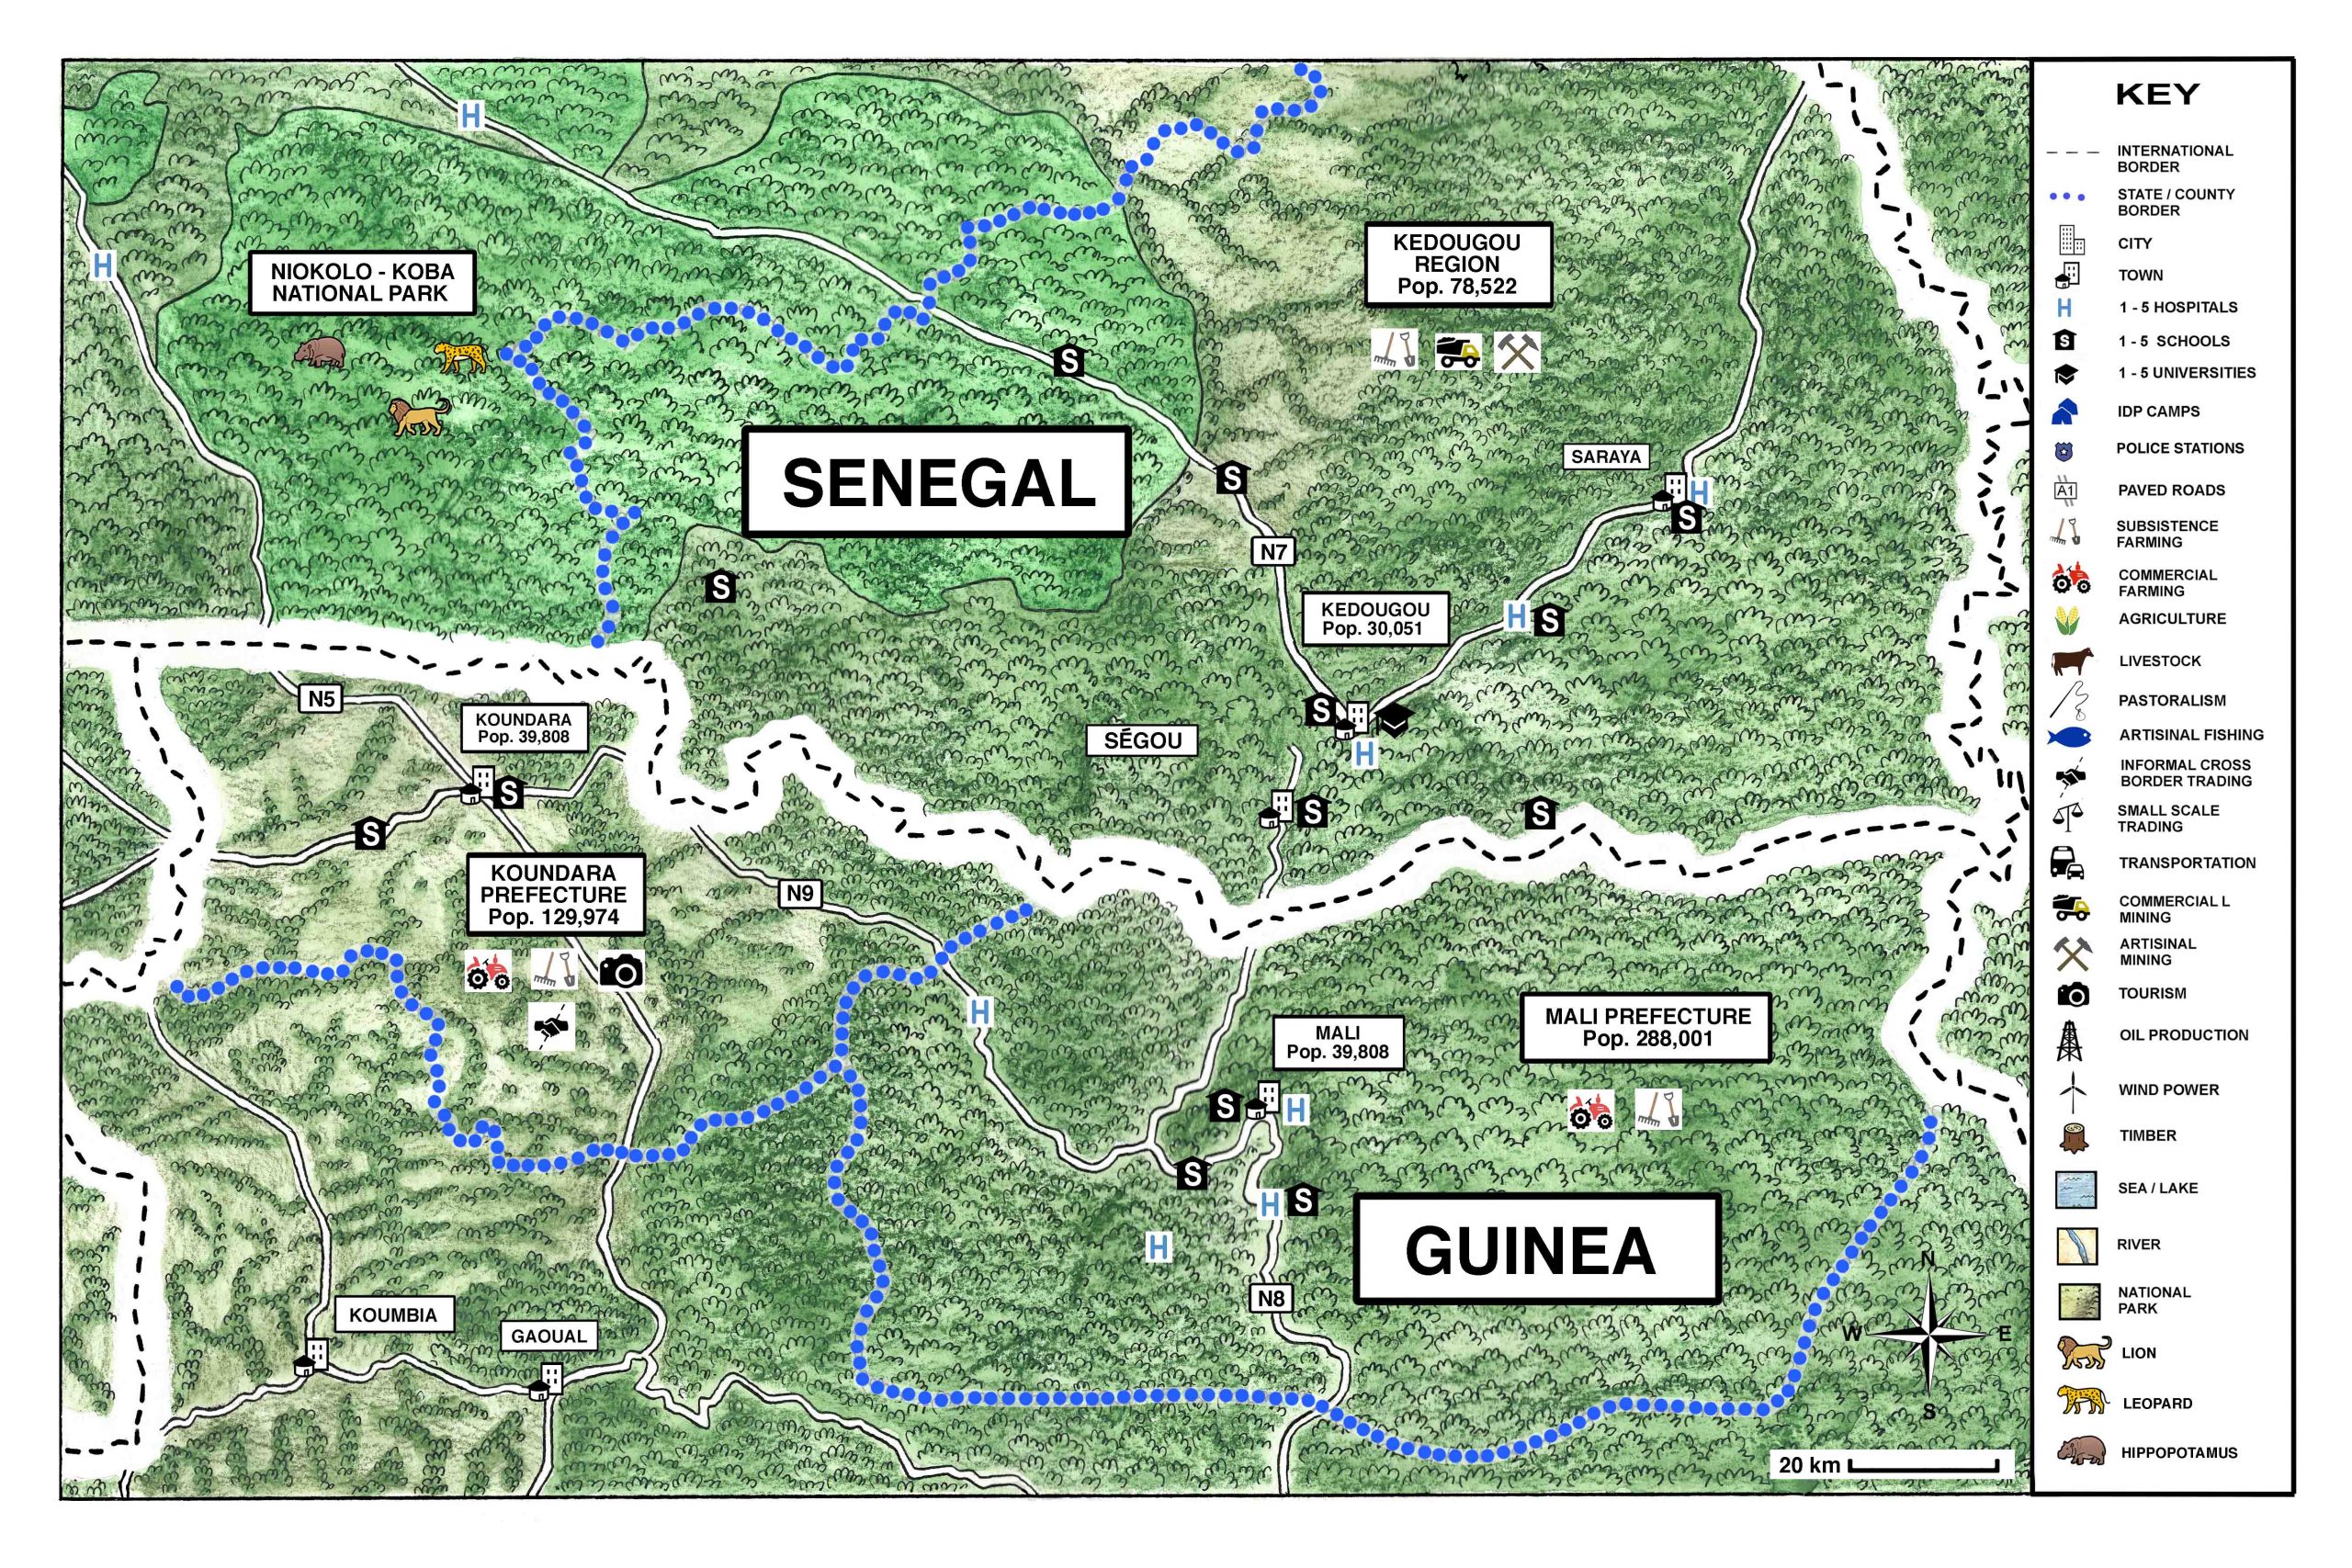 GUINEA - SENEGAL_illustration